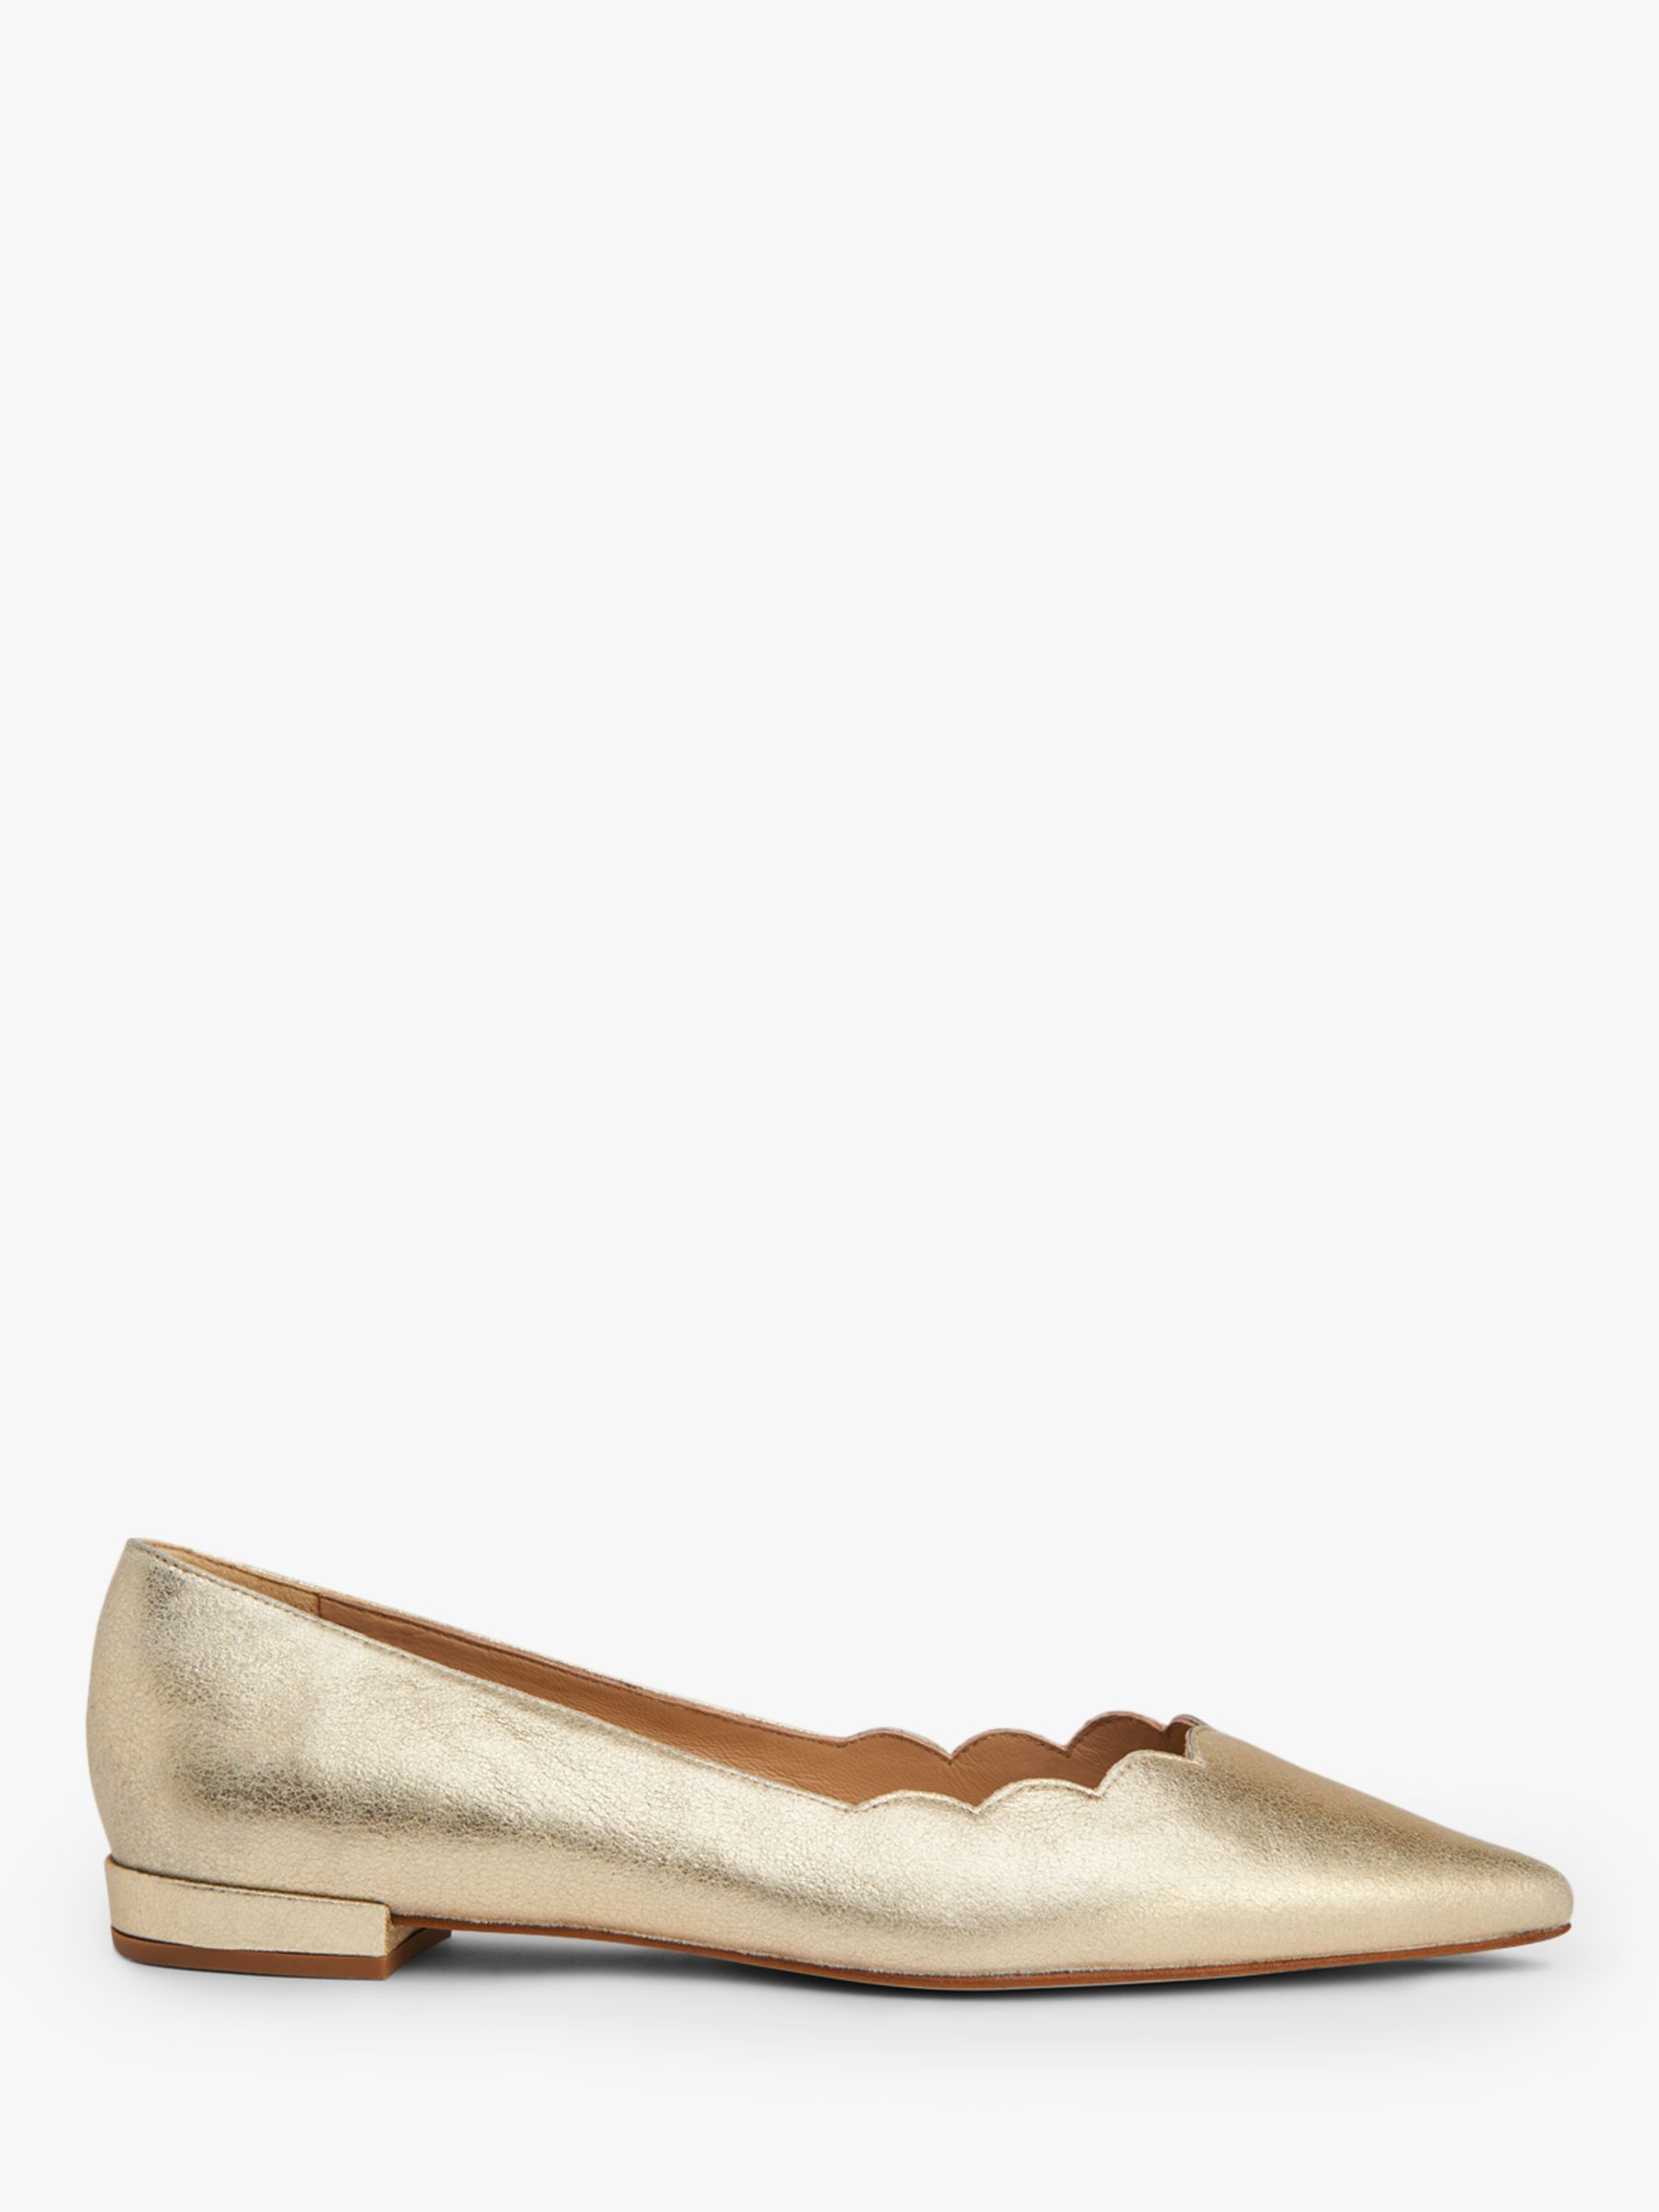 L.K.Bennett Justine Flat Court Shoes, Soft Gold Leather, 3